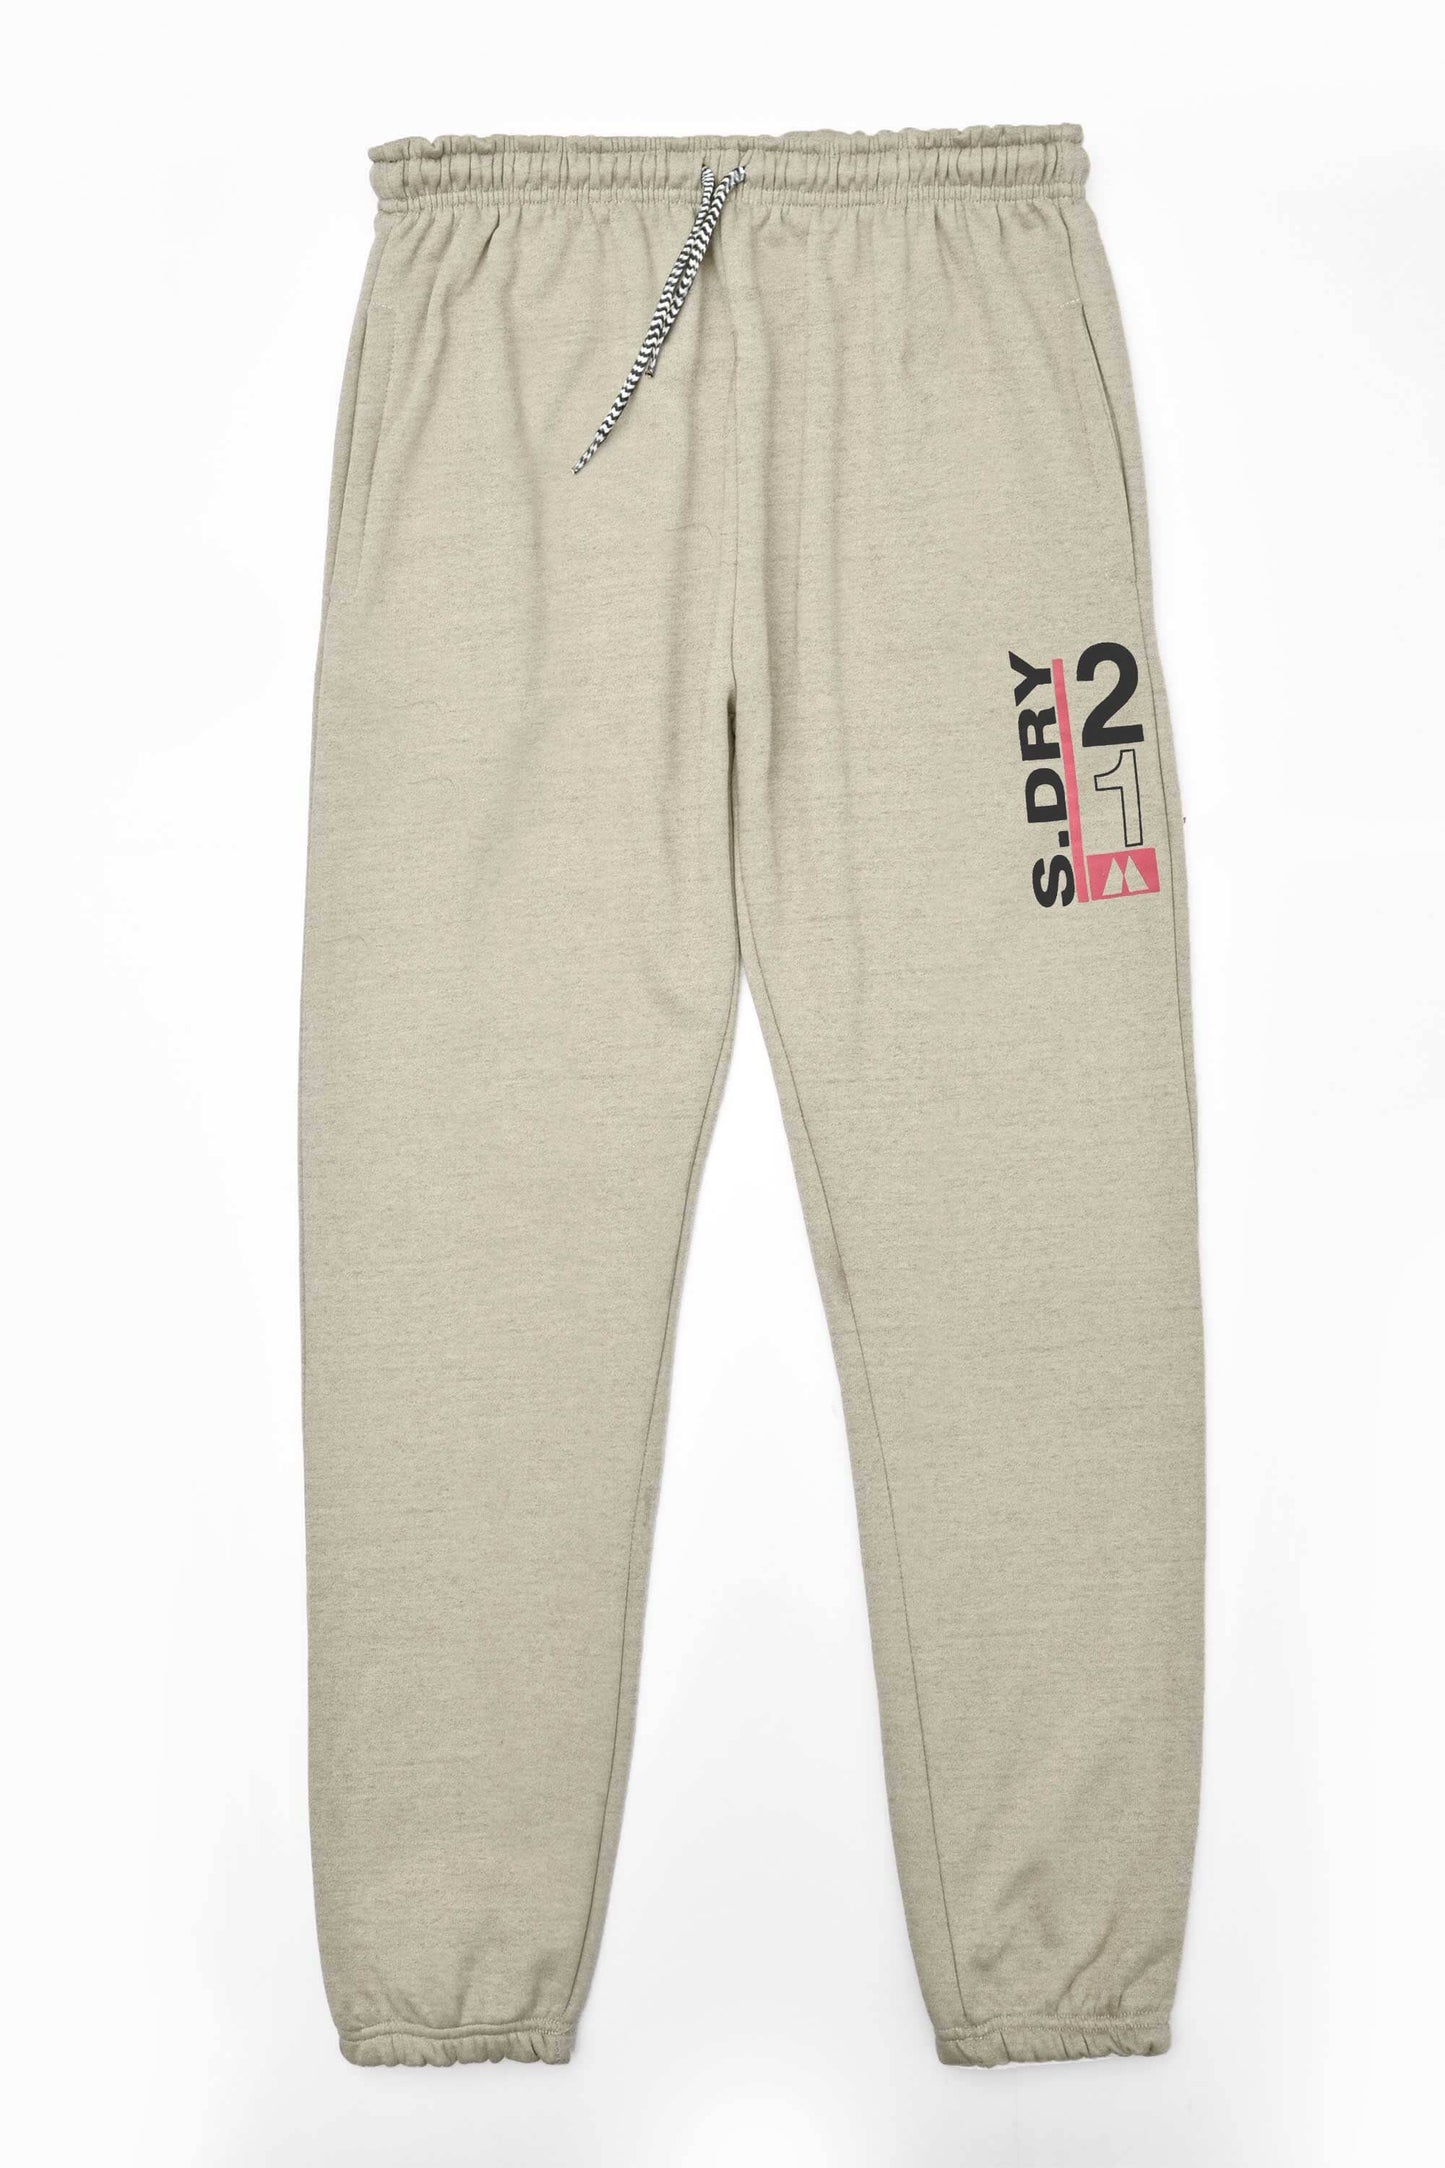 MAX 21 Men's S Dry Printed Fleece Joggers Pants Men's Jogger Pants SZK 